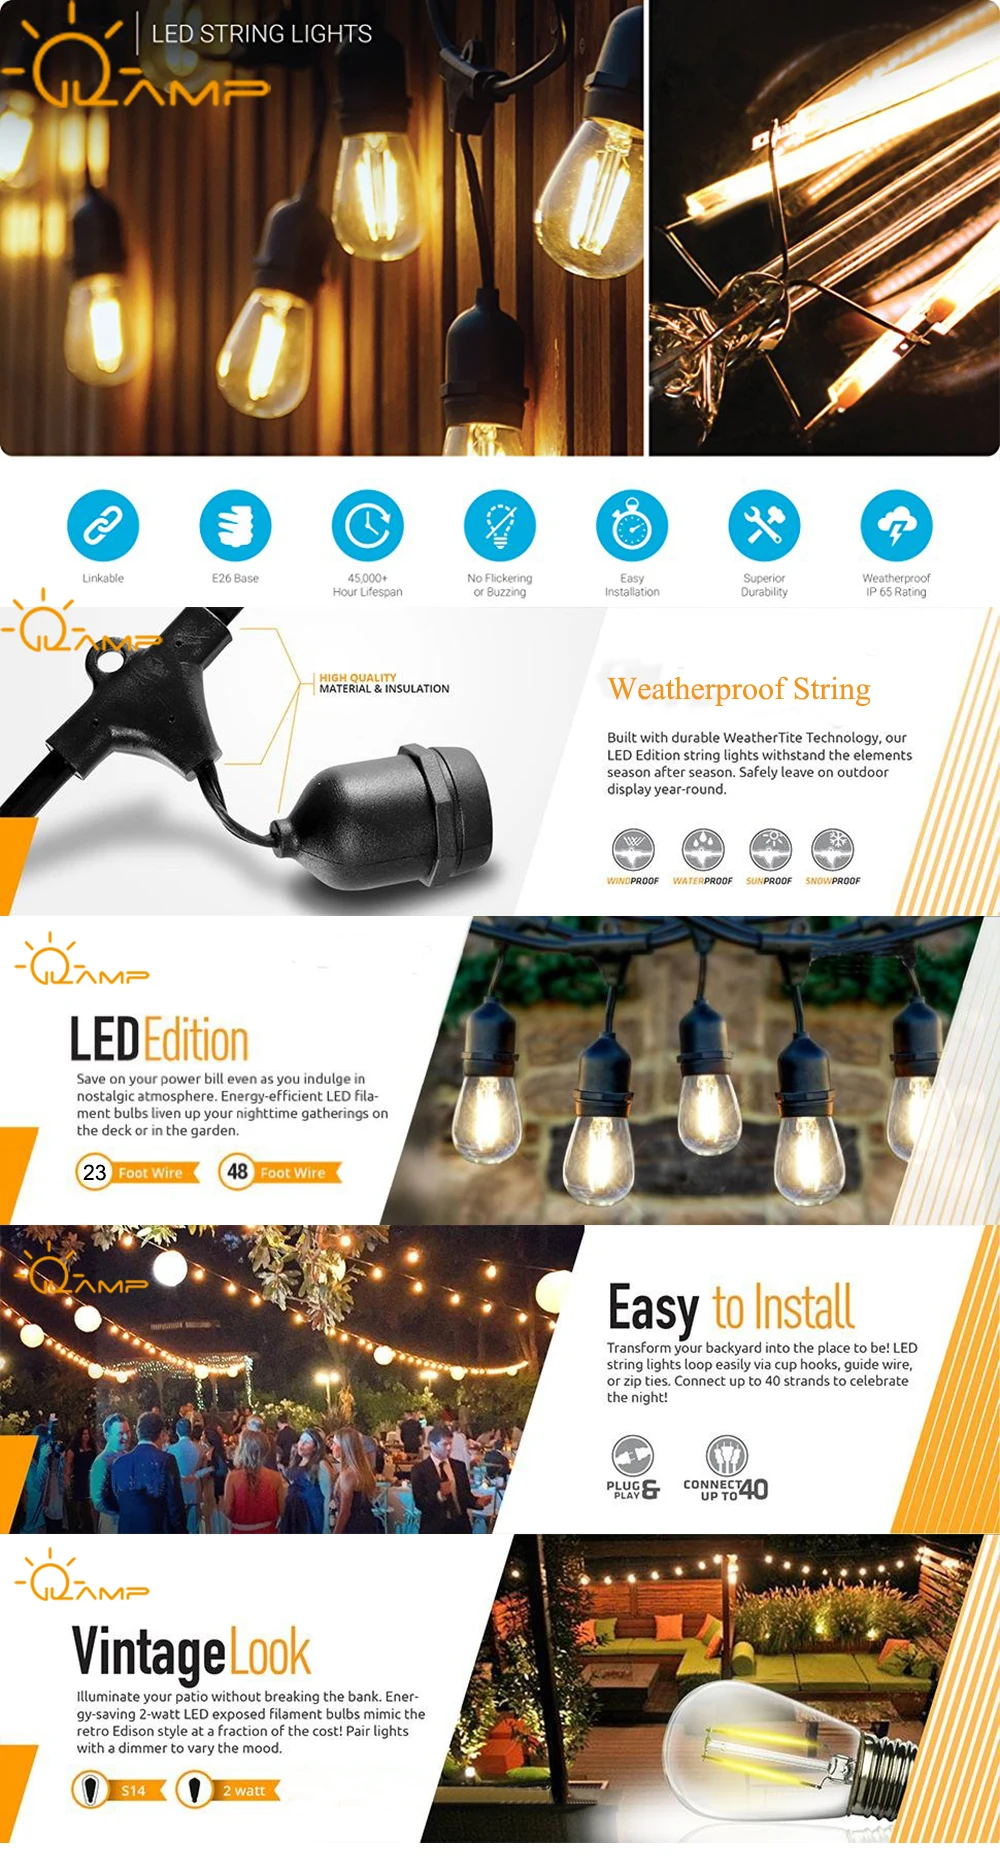 UL lighting decoration outdoor comercial light string with s14 edison bulbs for 110v 120v